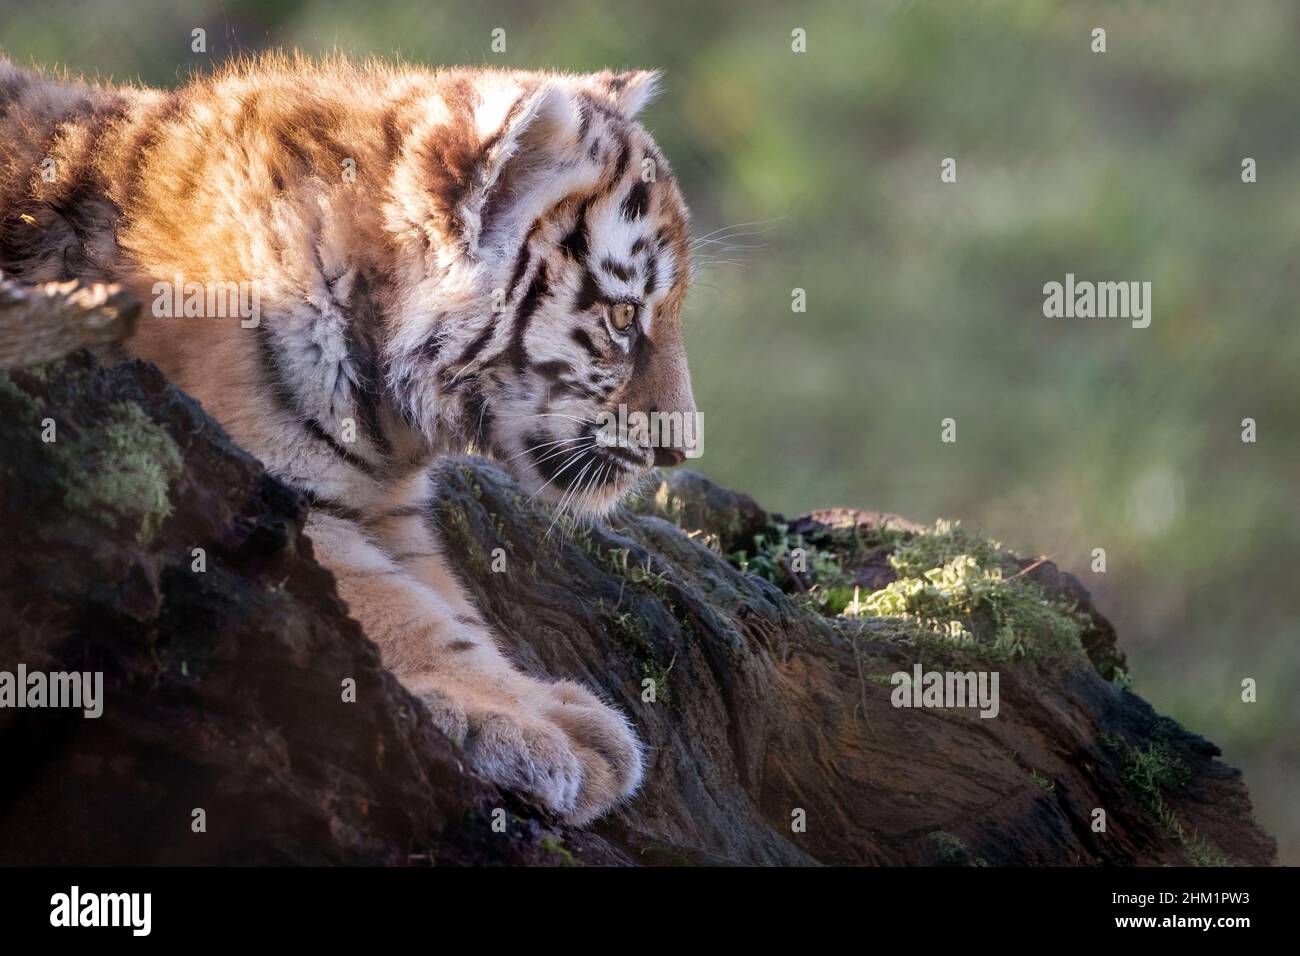 Amur (Siberian) tiger cub on tree stump Stock Photo